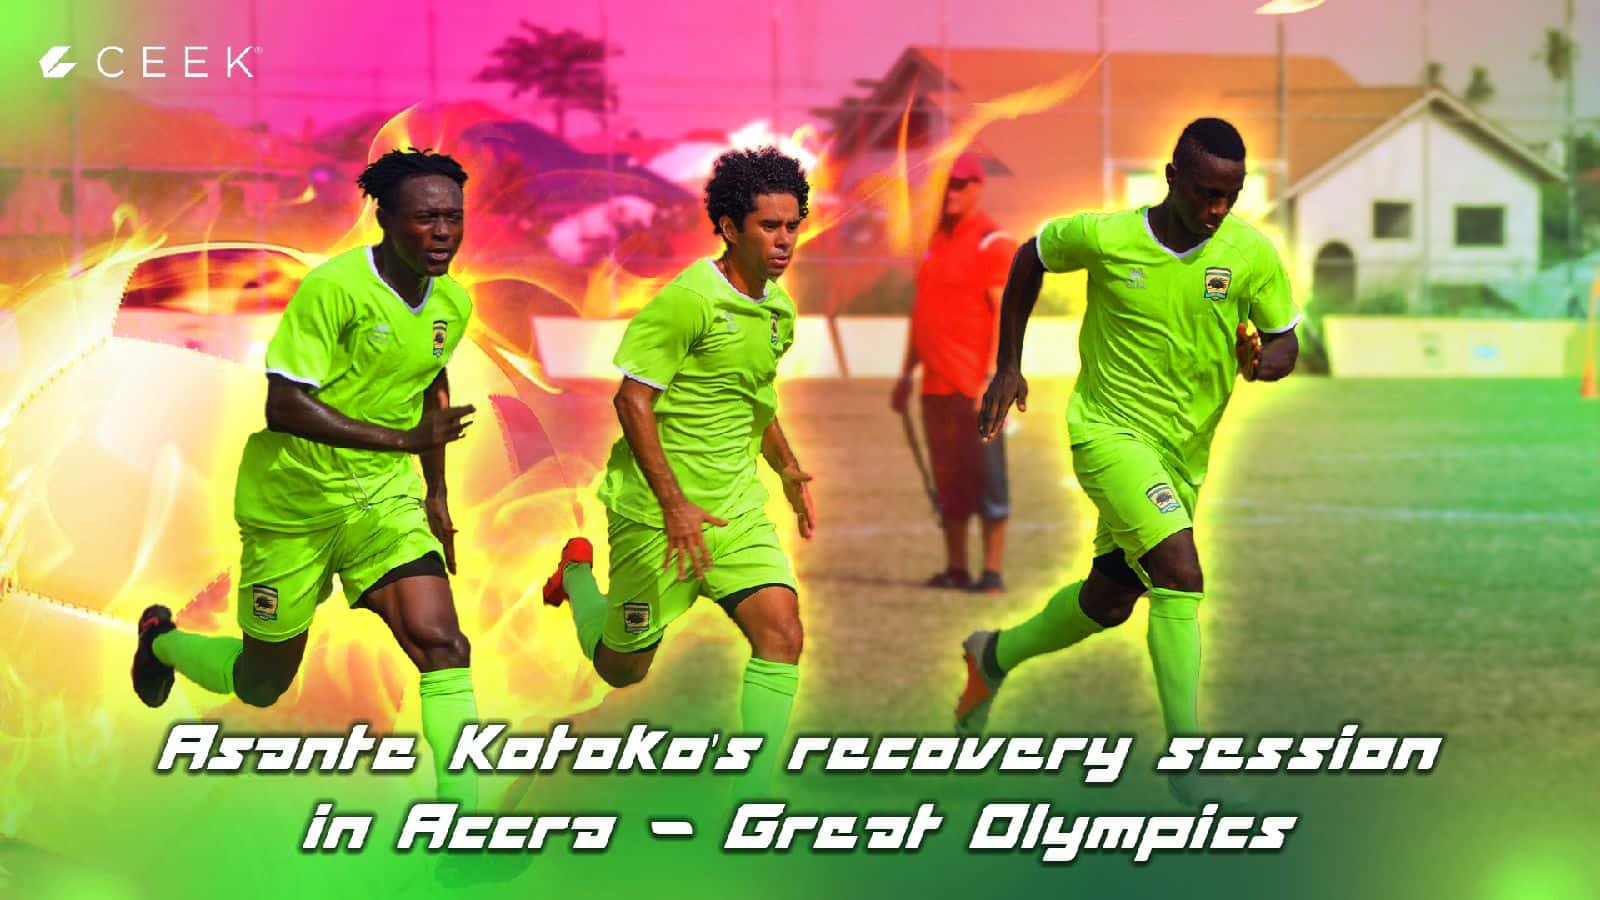 Asante Kotoko Asante Kotoko's recovery session in Accra | Great Olympics